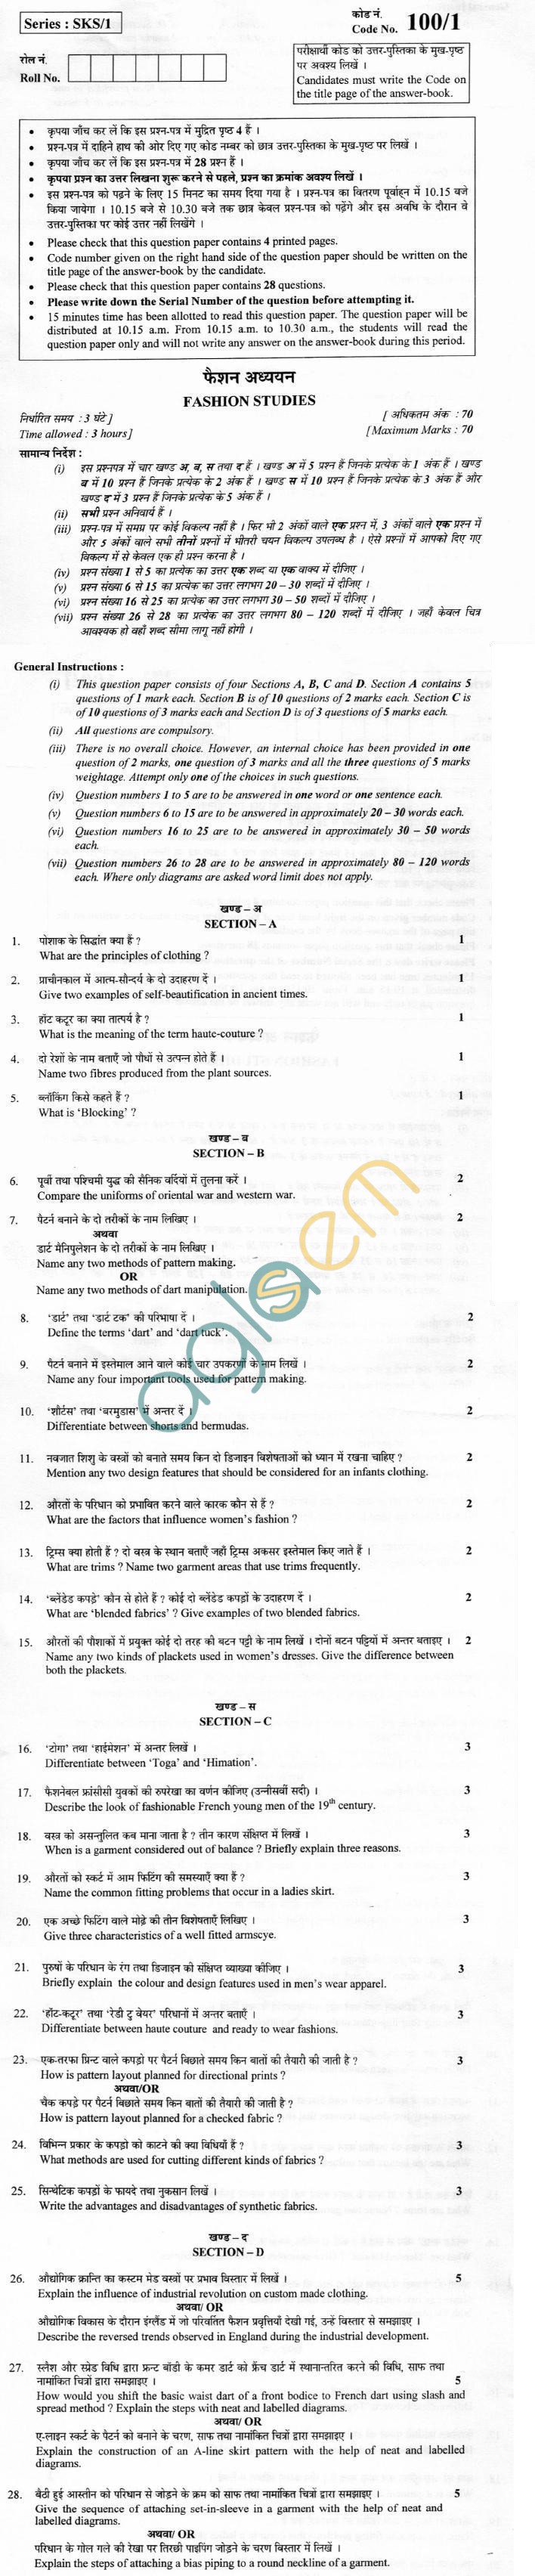 CBSE Board Exam 2013 Class XII Question Paper - Fashion Studies